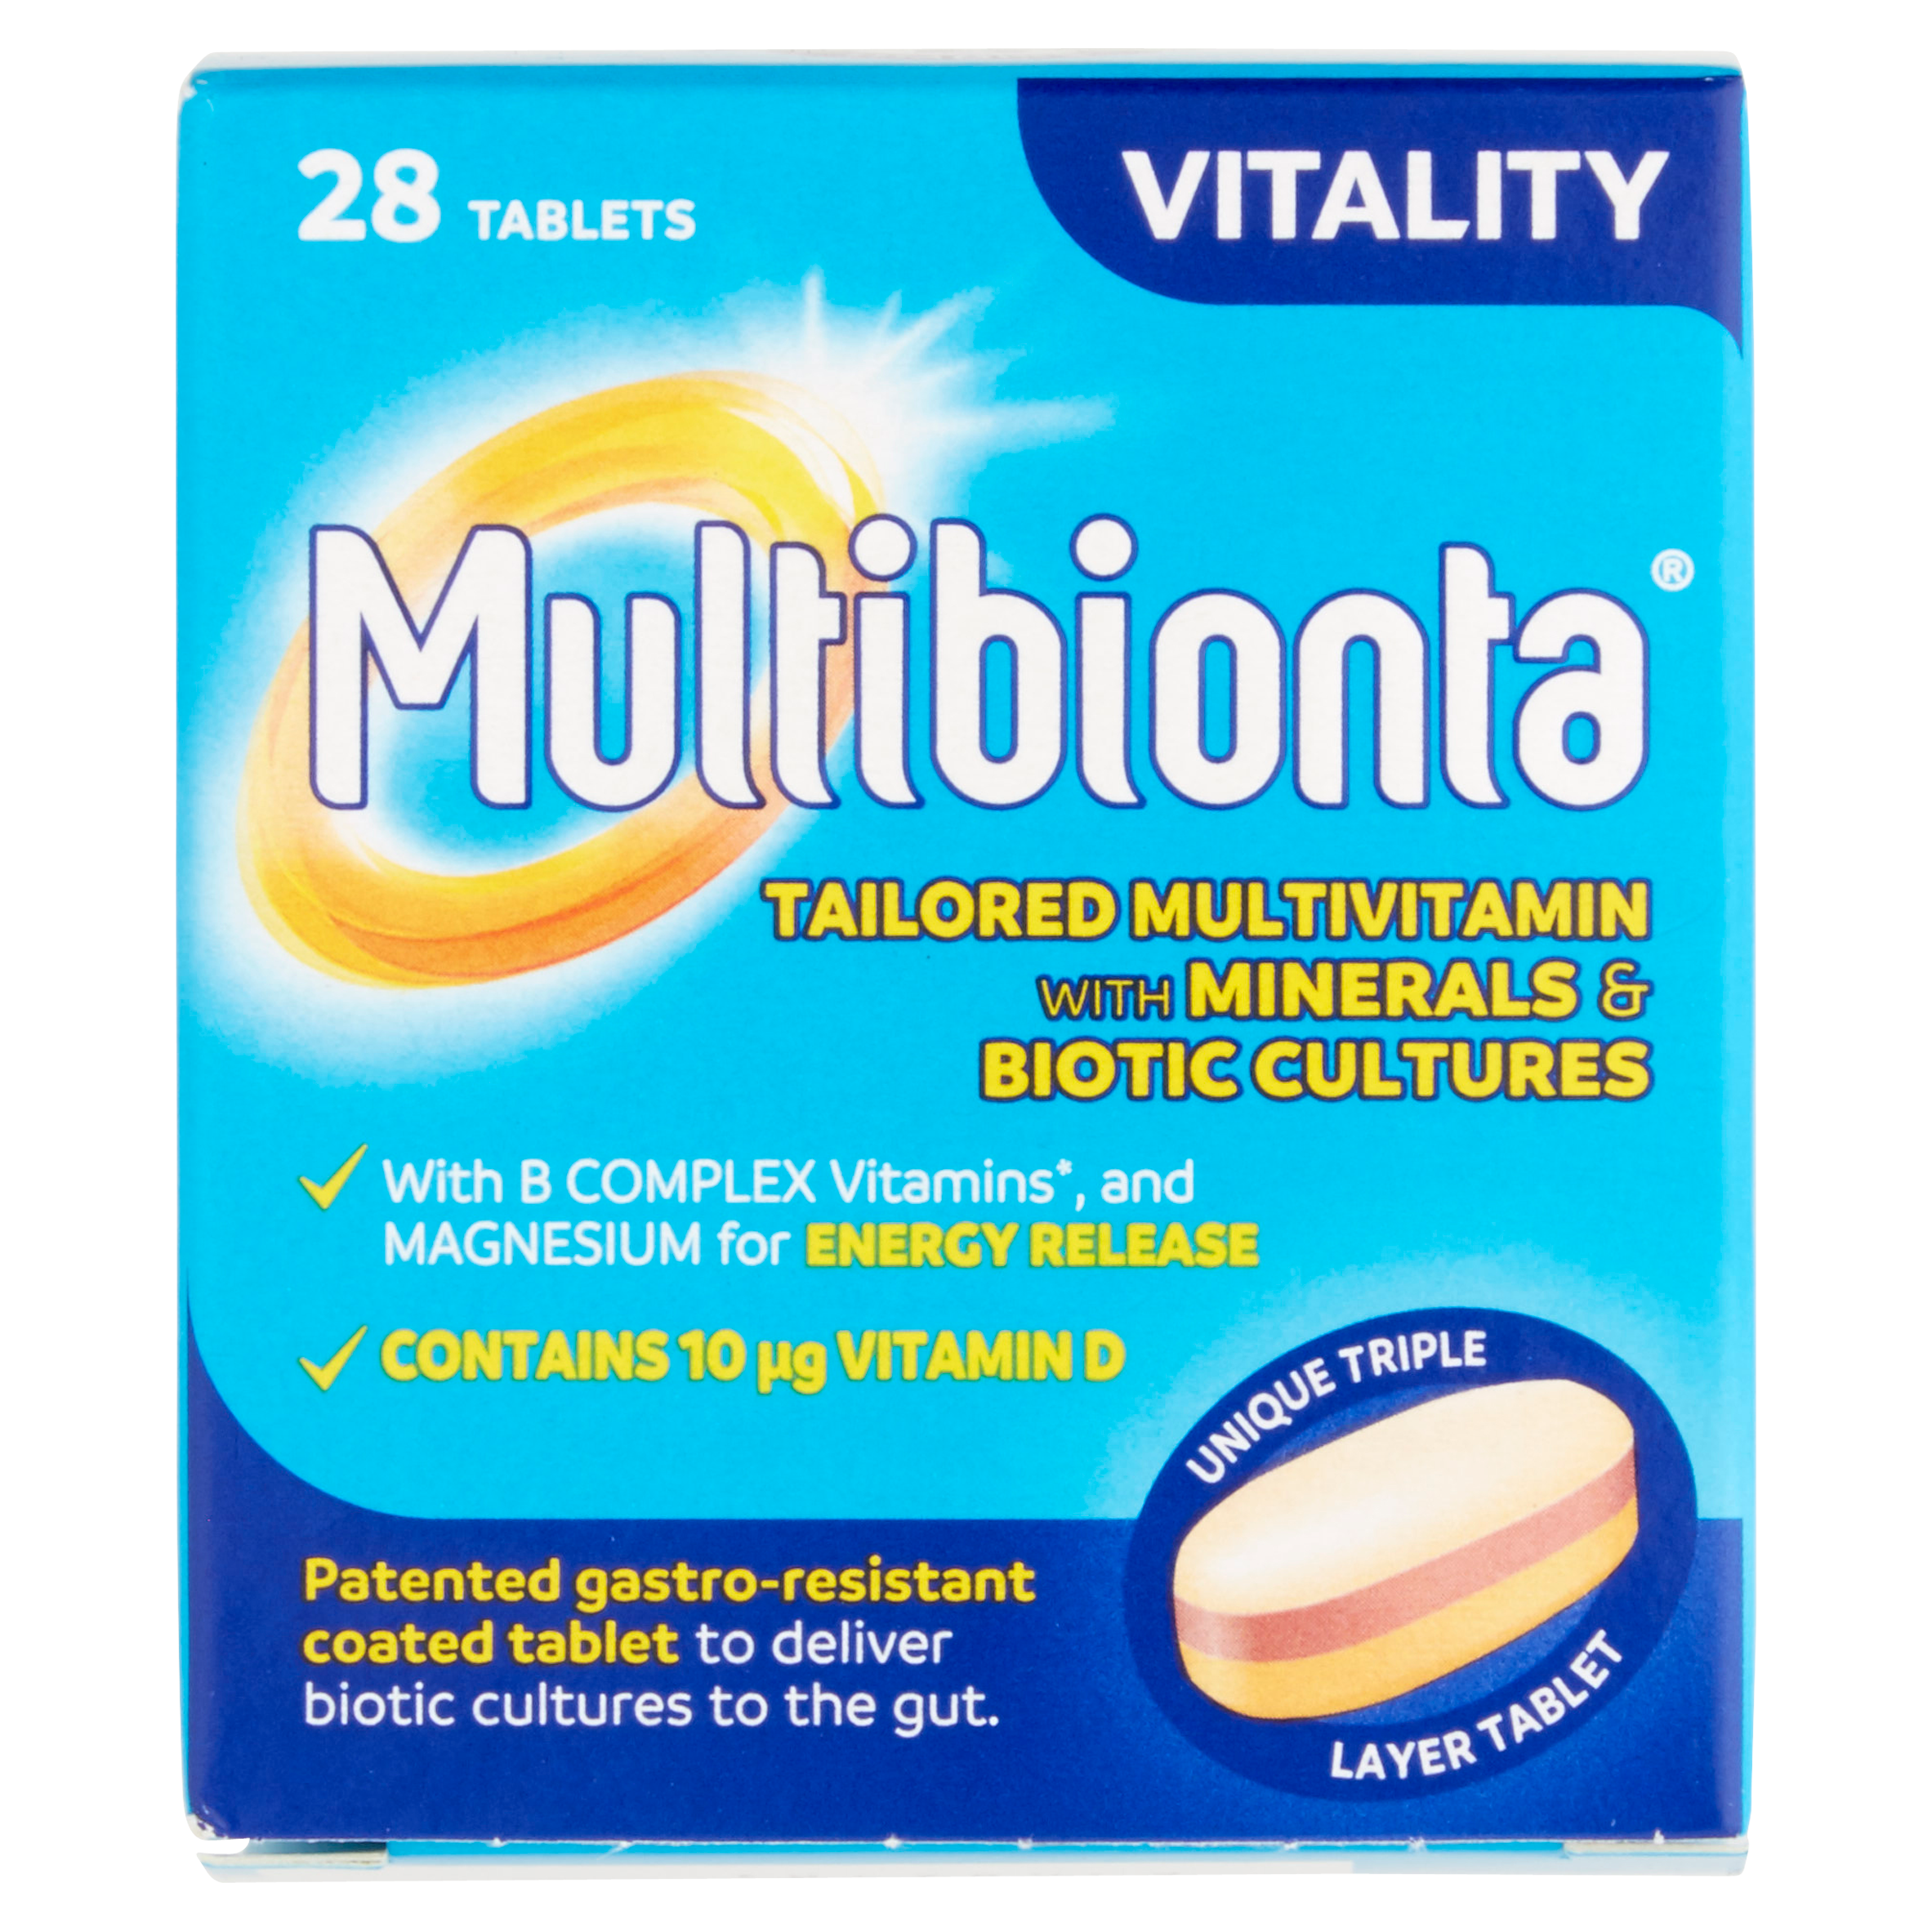 Seven Seas Multibionta Vitality 28s